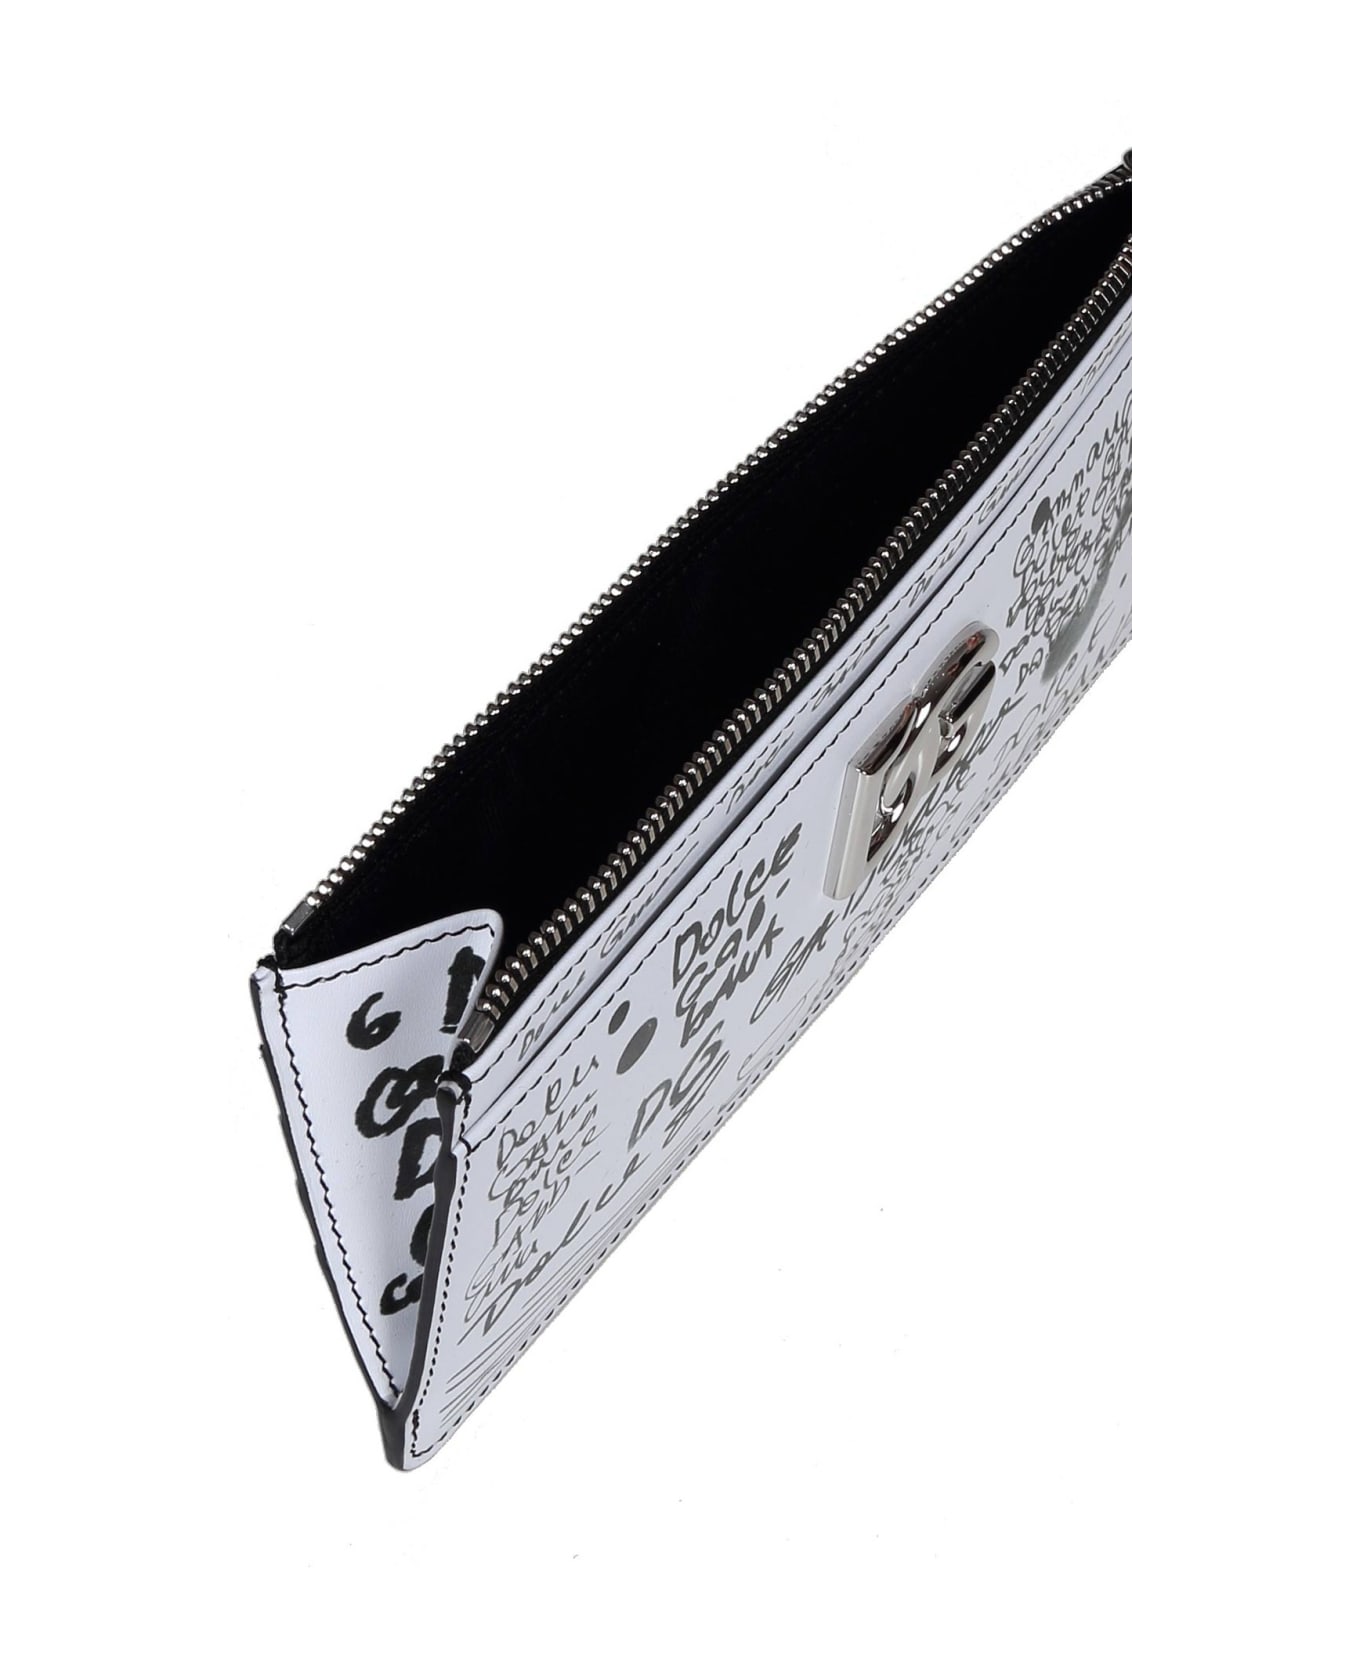 Dolce & Gabbana Card Holder In Graffiti Print Leather - Bianco